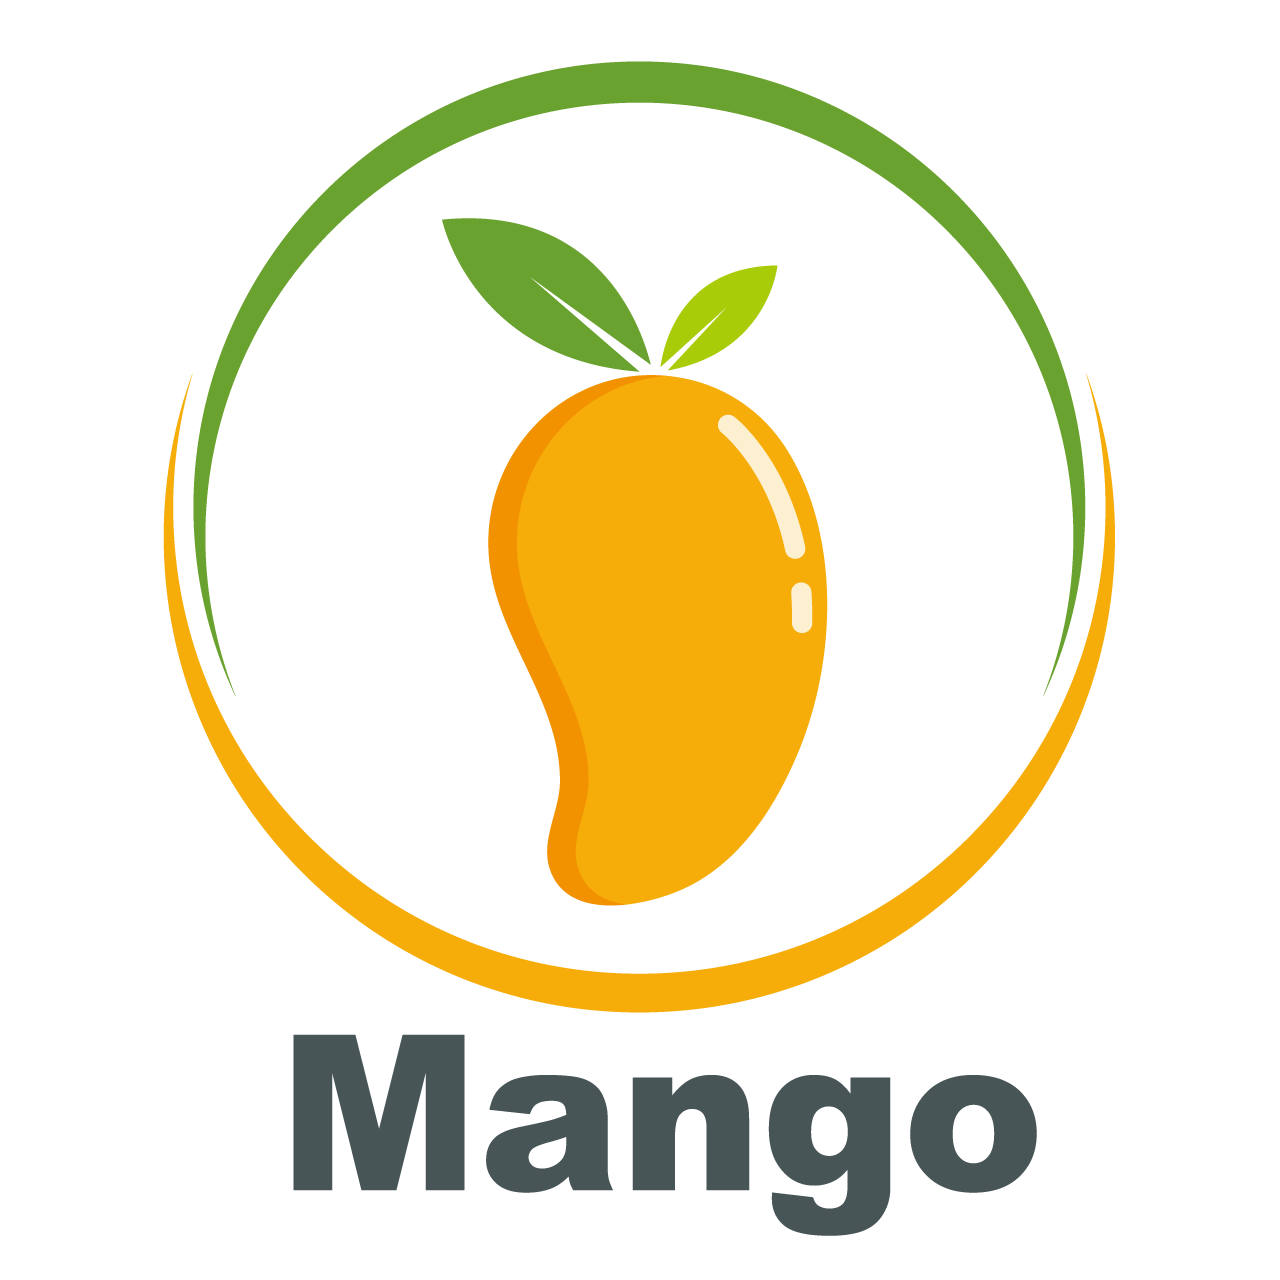 Mango fruit illustration logo design cartoon clipart